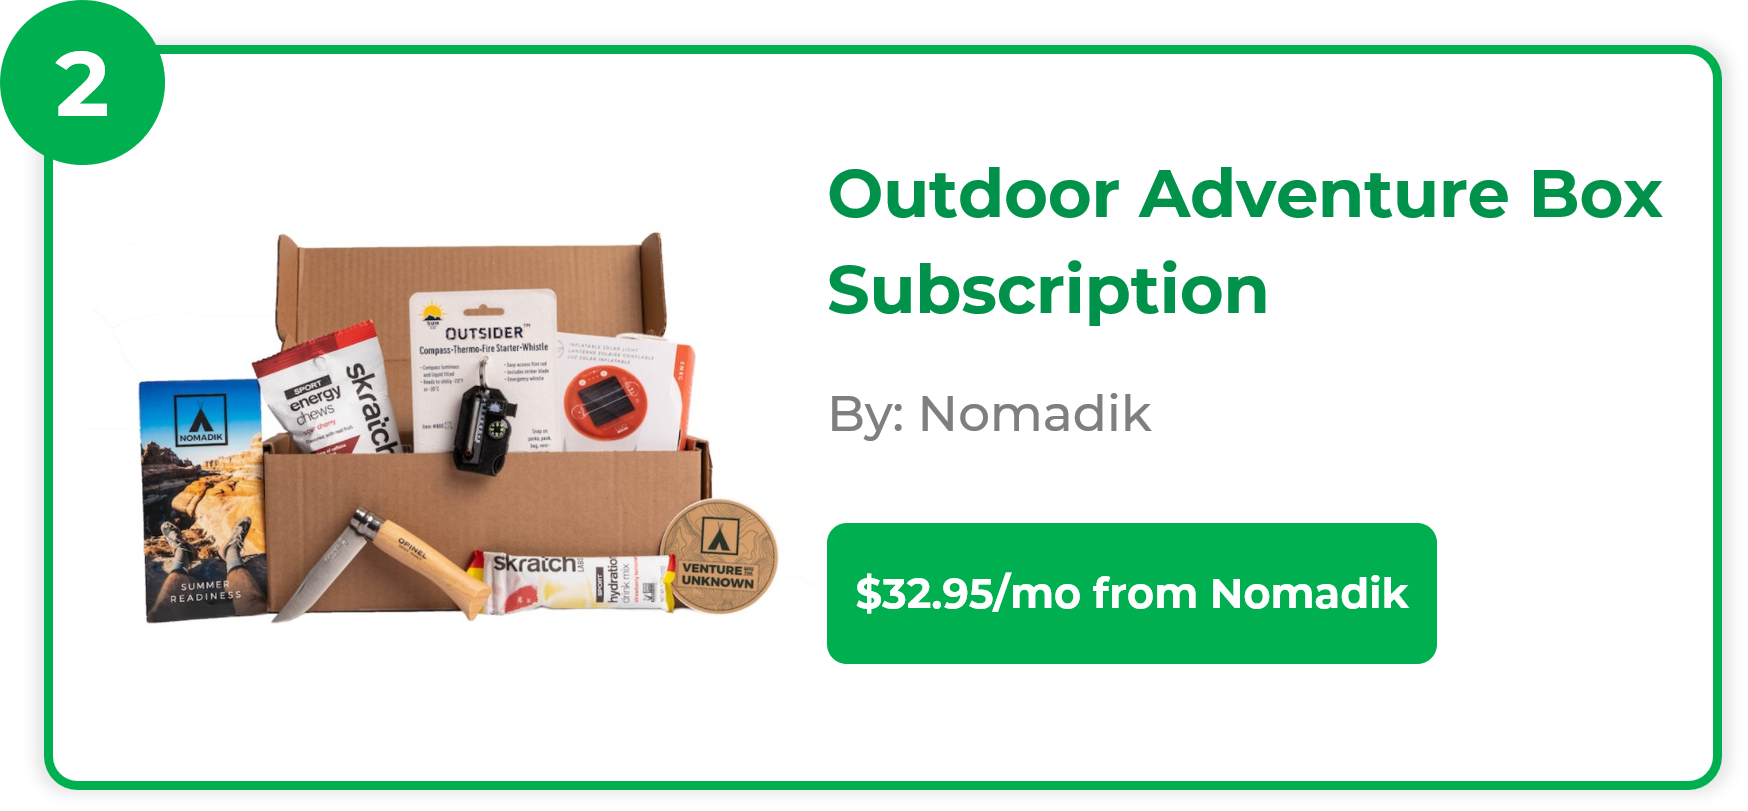 Outdoor Adventure Mystery Box Subscription - Nomadik